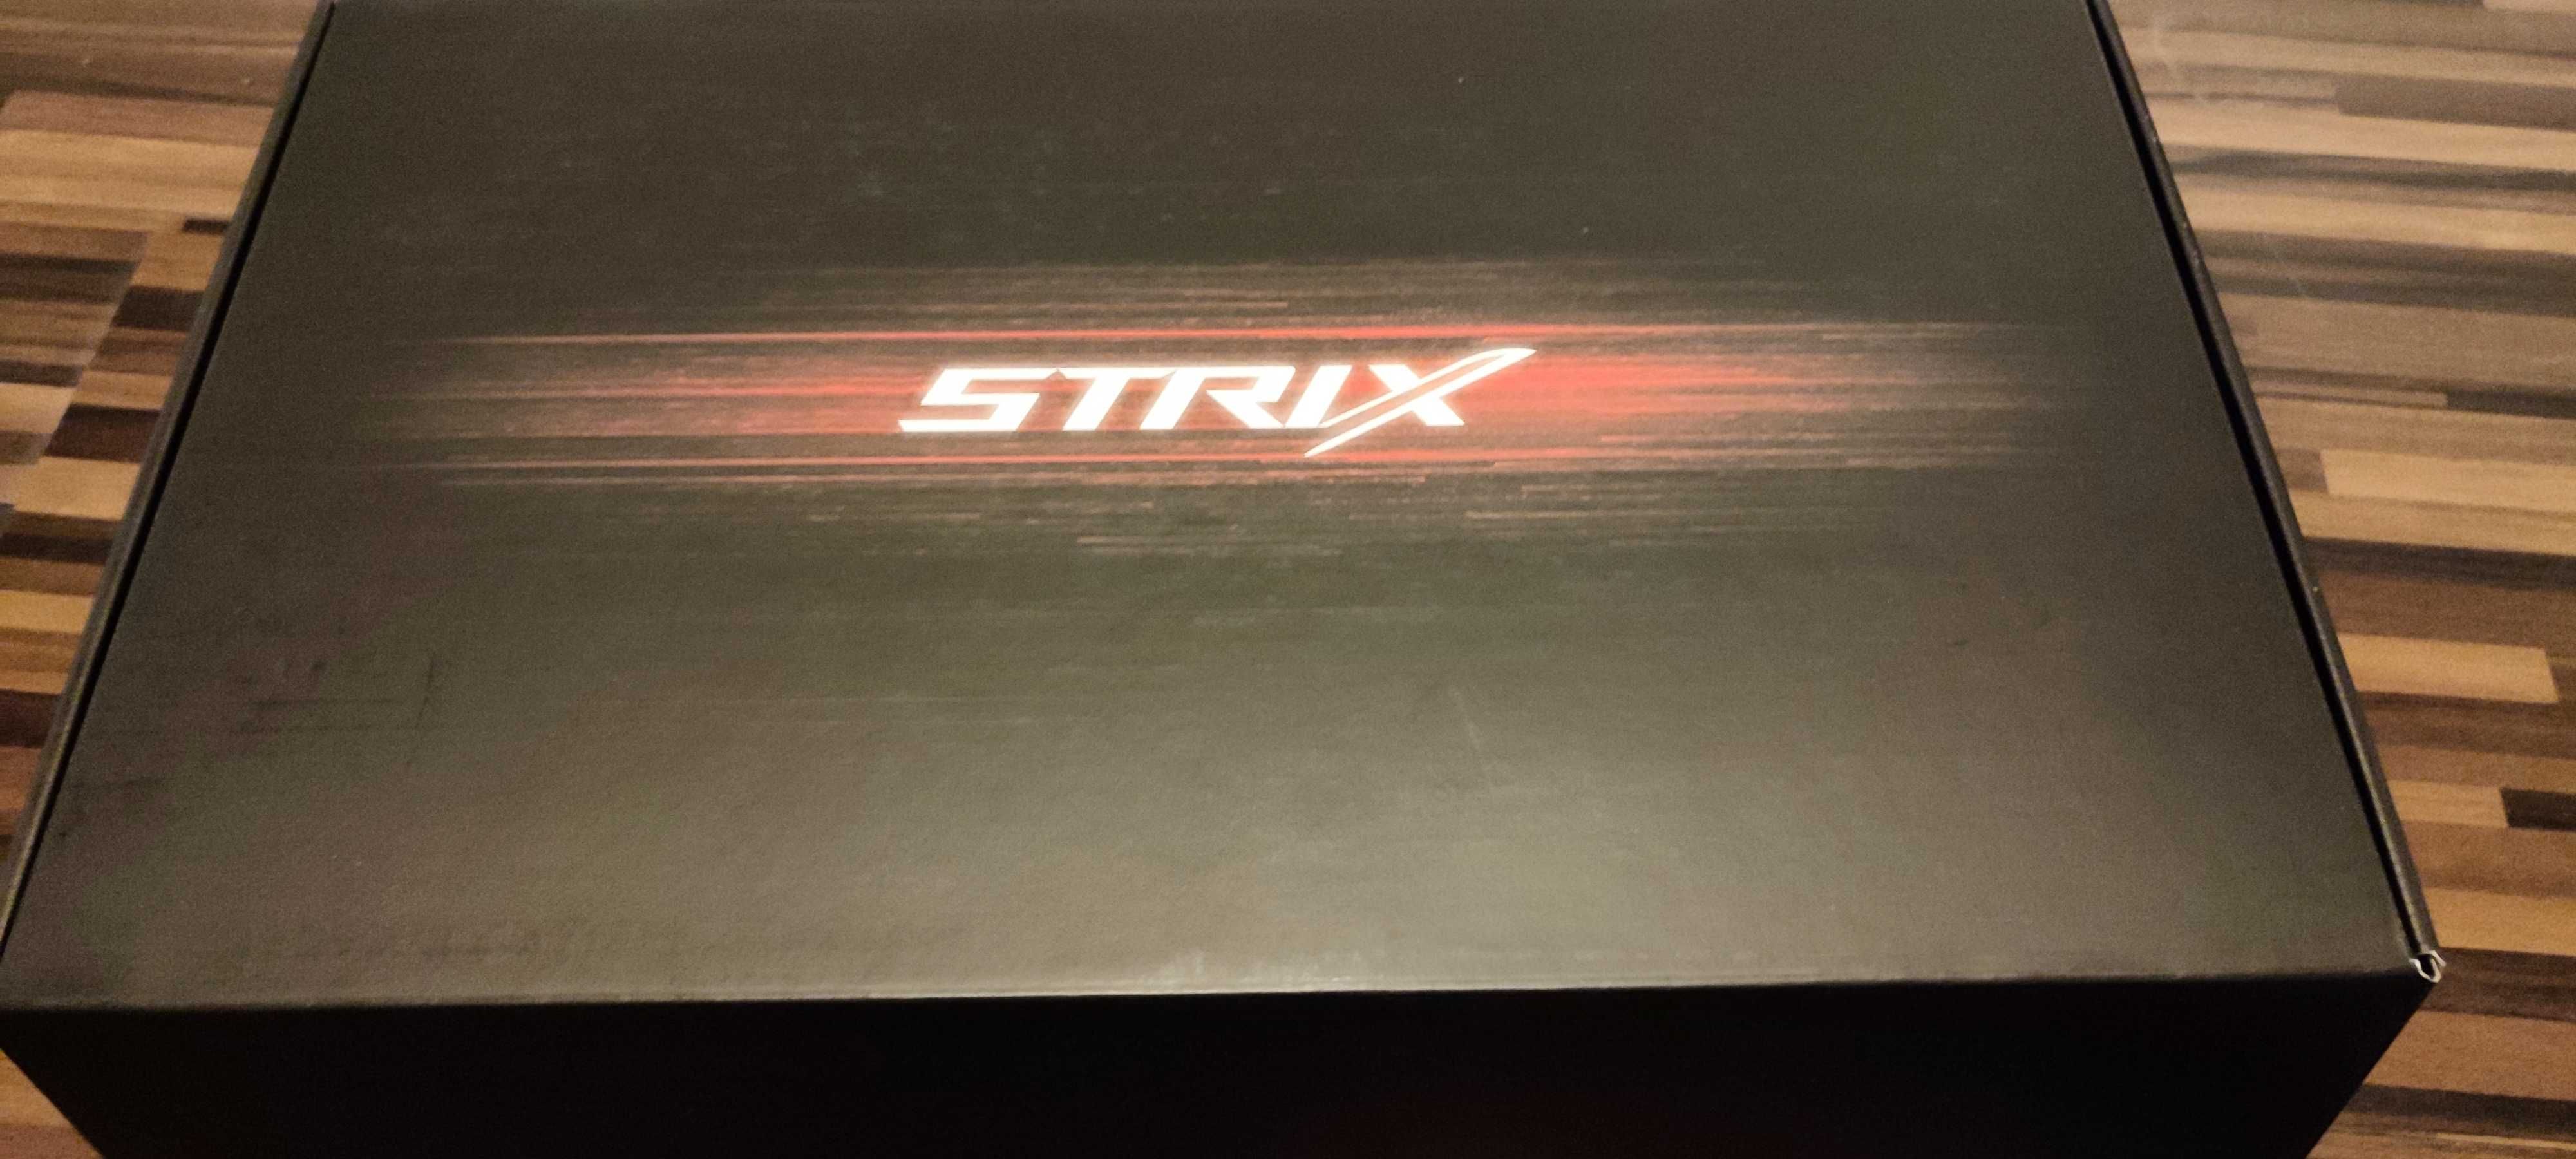 Asus ROG Strix gtx 1070